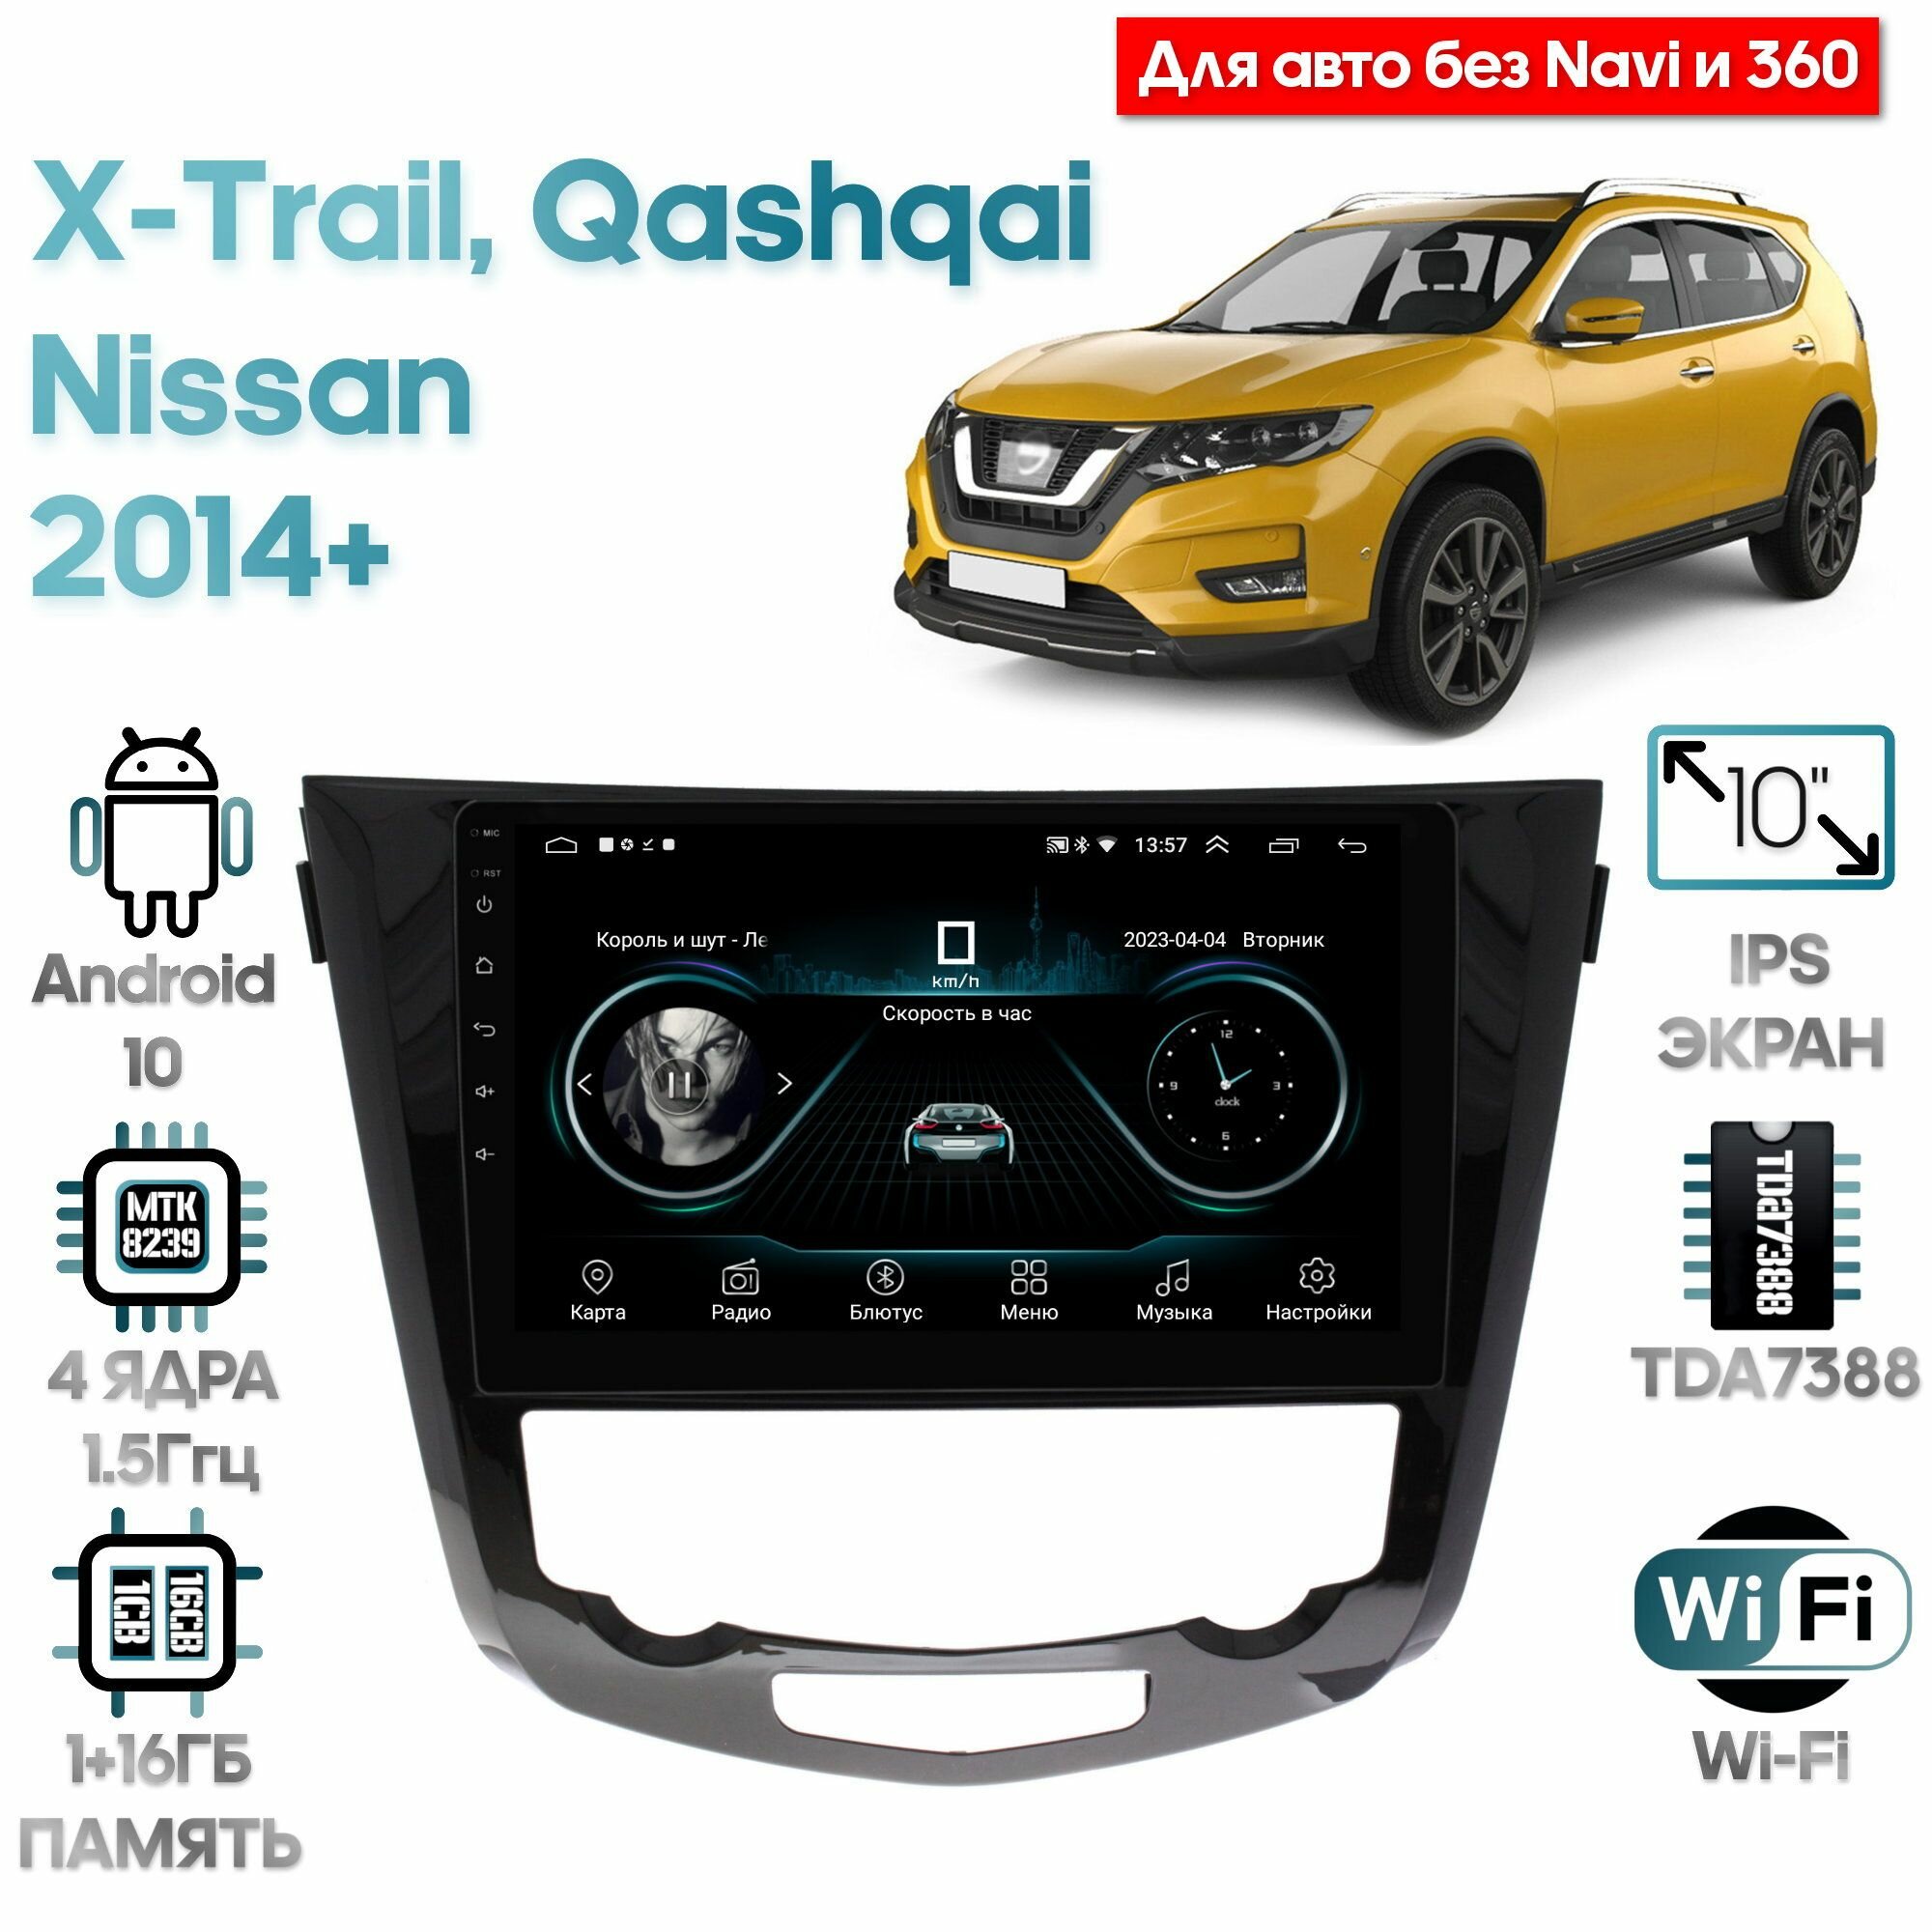 Штатная магнитола Wide Media для Nissan Qashqai, X-Trail 2014+ (без Navi и 360) / Android 9, 10 дюймов, WiFi, 1/32GB, 4 ядра